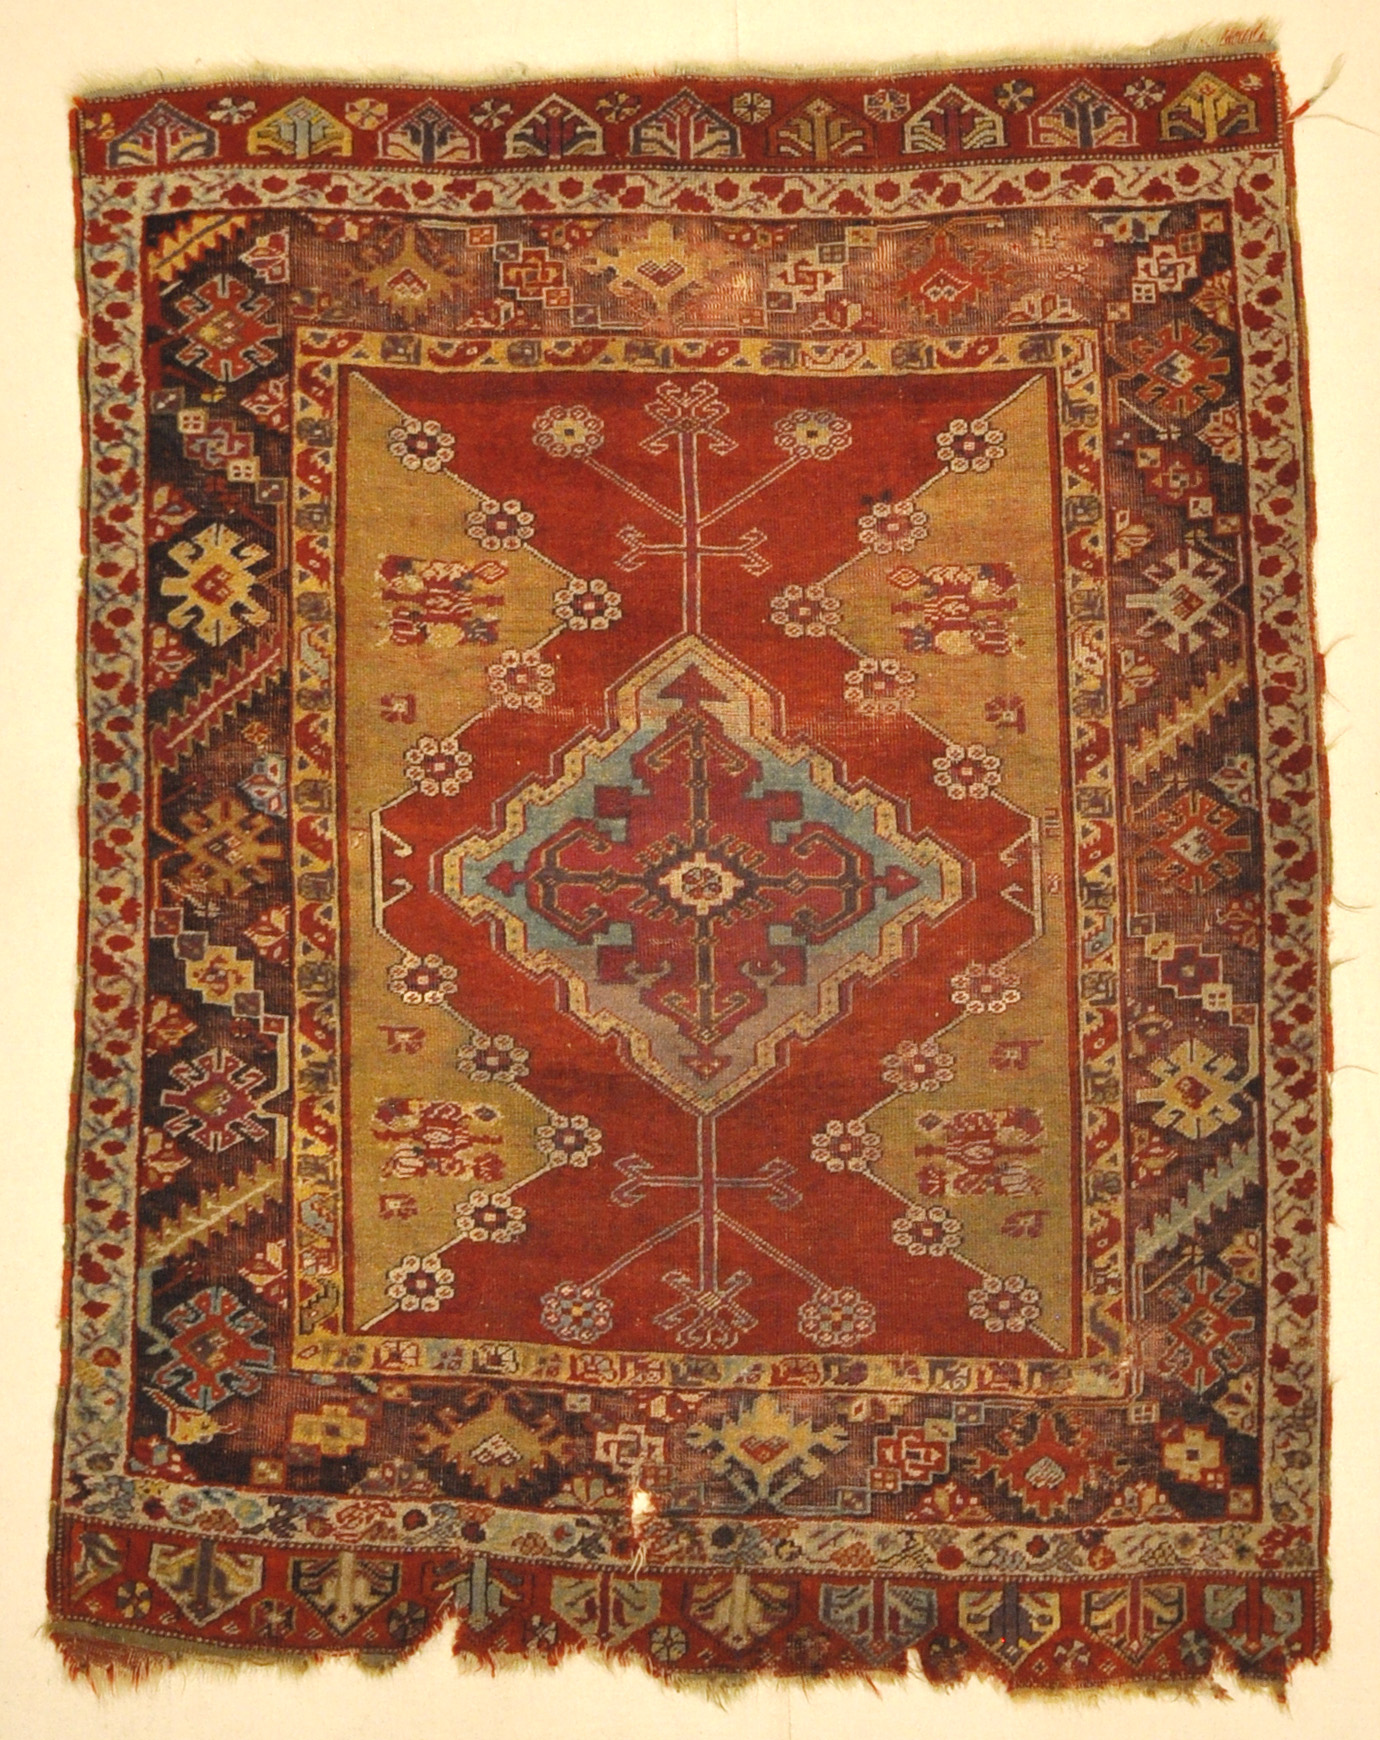 Antique Turkish Handwoven Mugur Rug Genuine Authentic Intricate Woven Carpet Art Santa Barbara Design Center Rugs and More